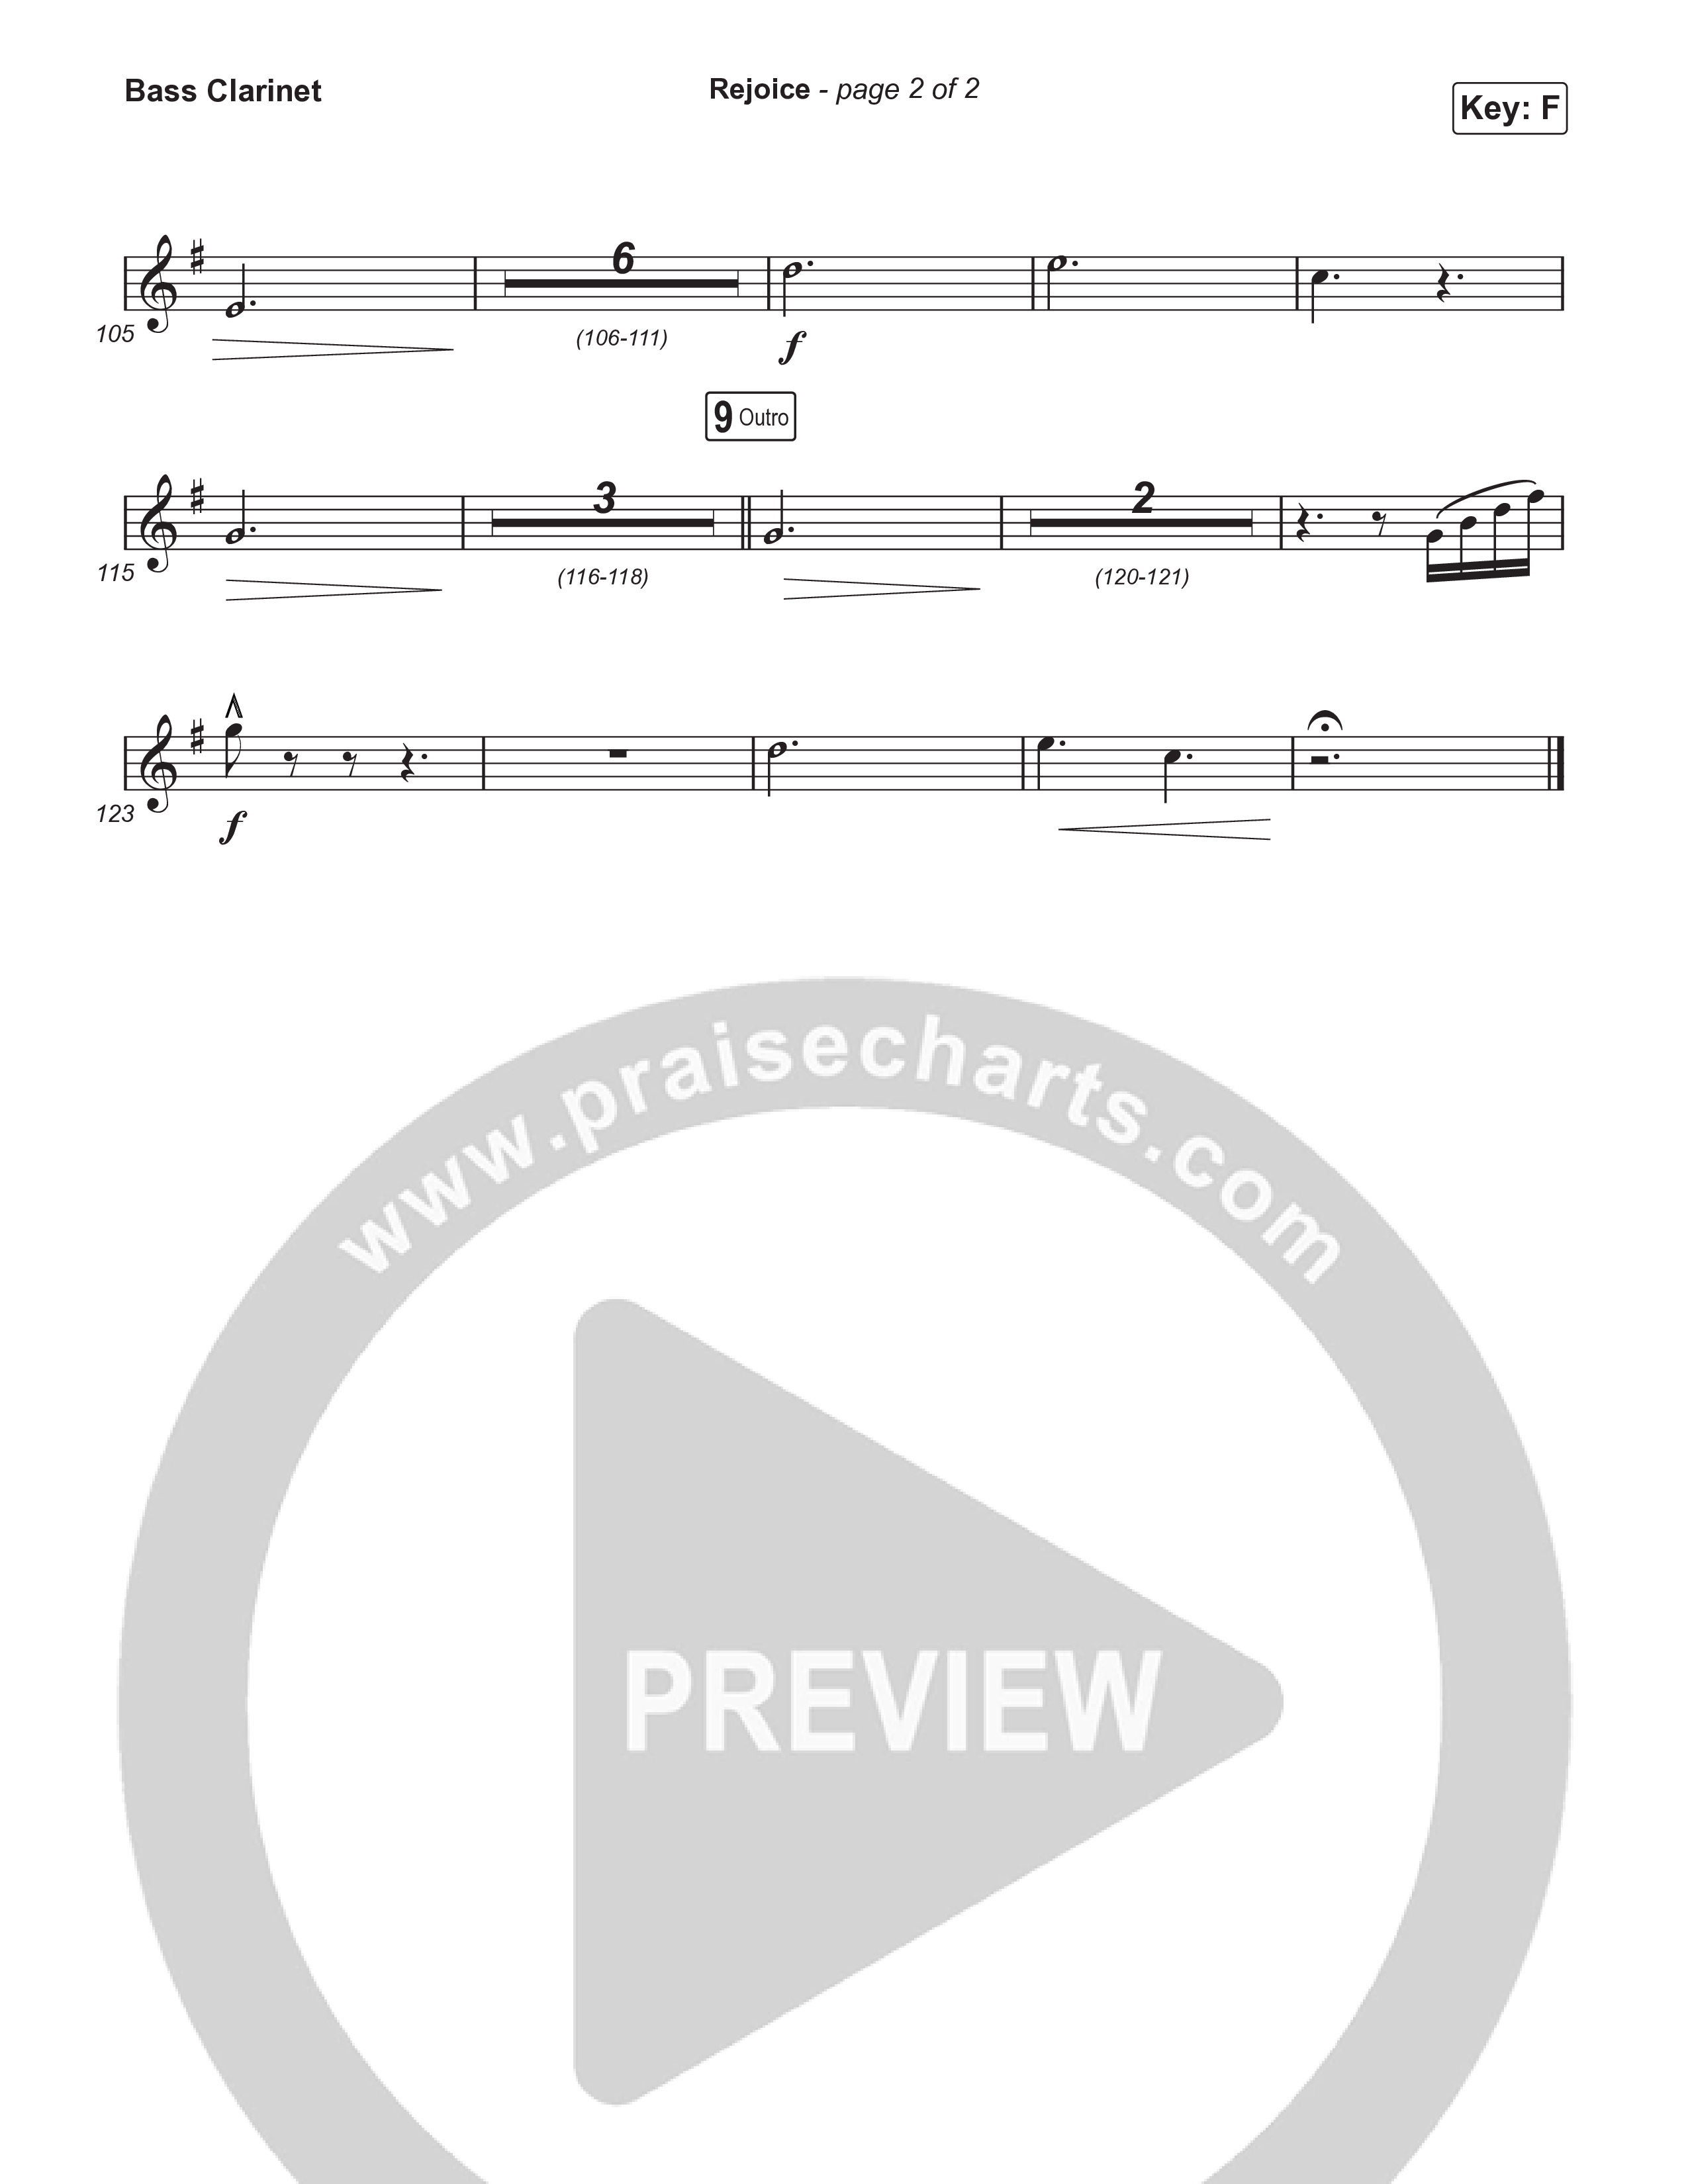 Rejoice Bass Clarinet (Travis Cottrell / Arr. Mason Brown / Orch. Travis Patton)